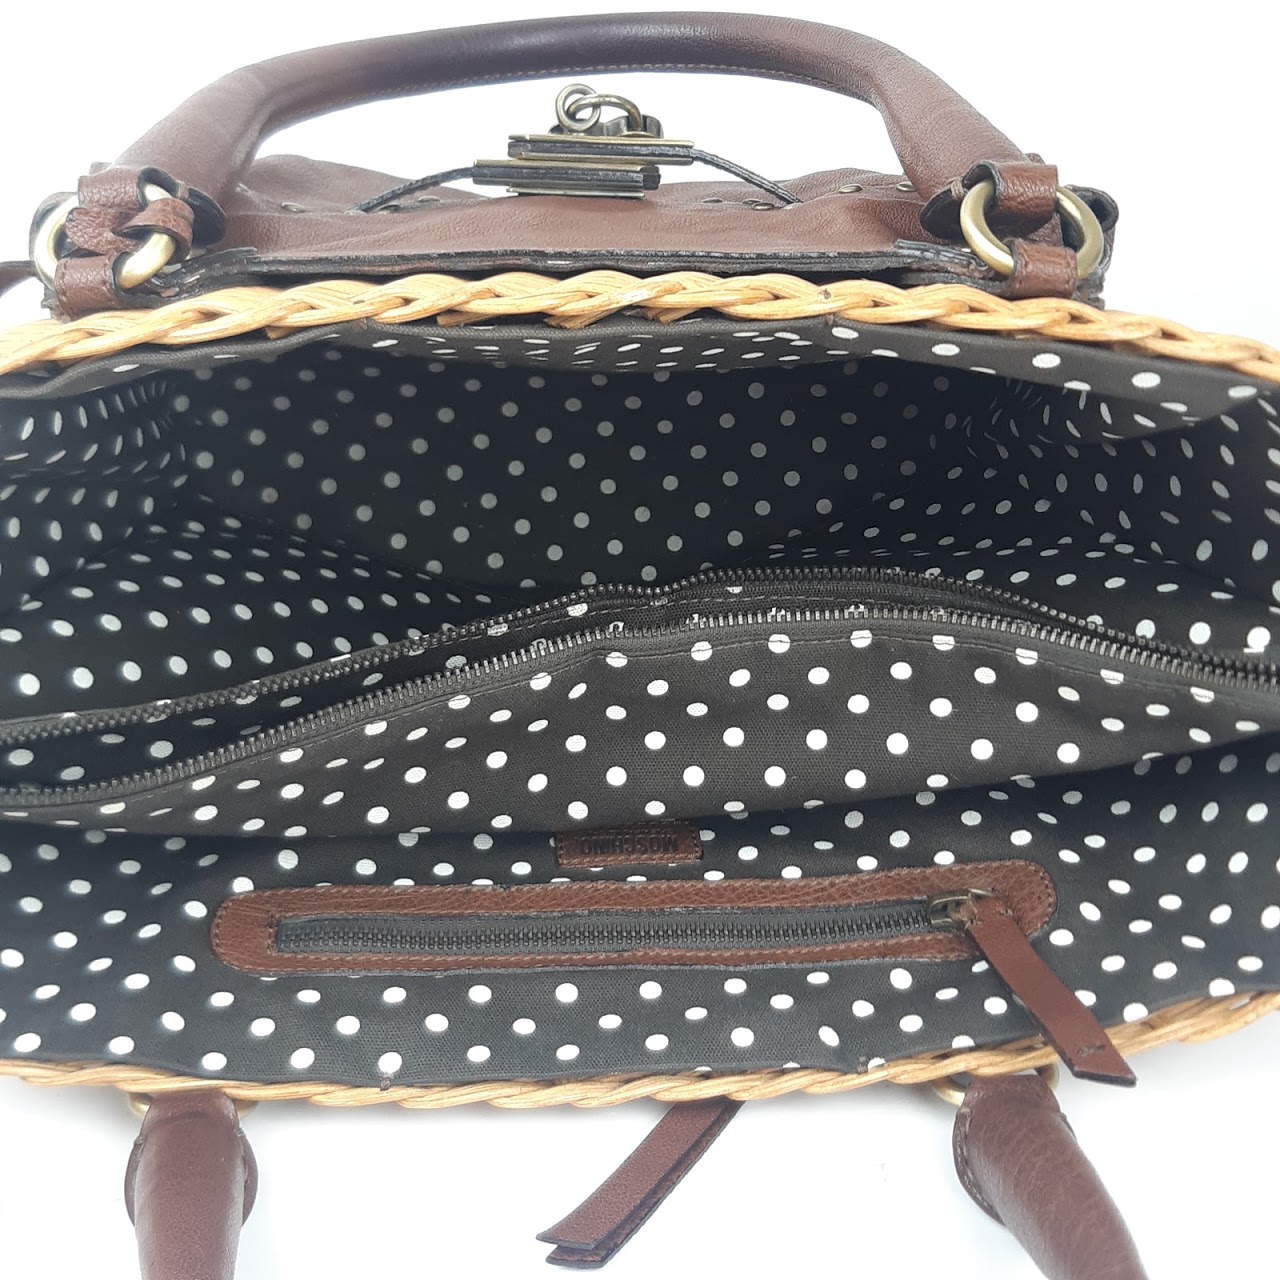 Moschino Cheap & Chic Wicker Handbag